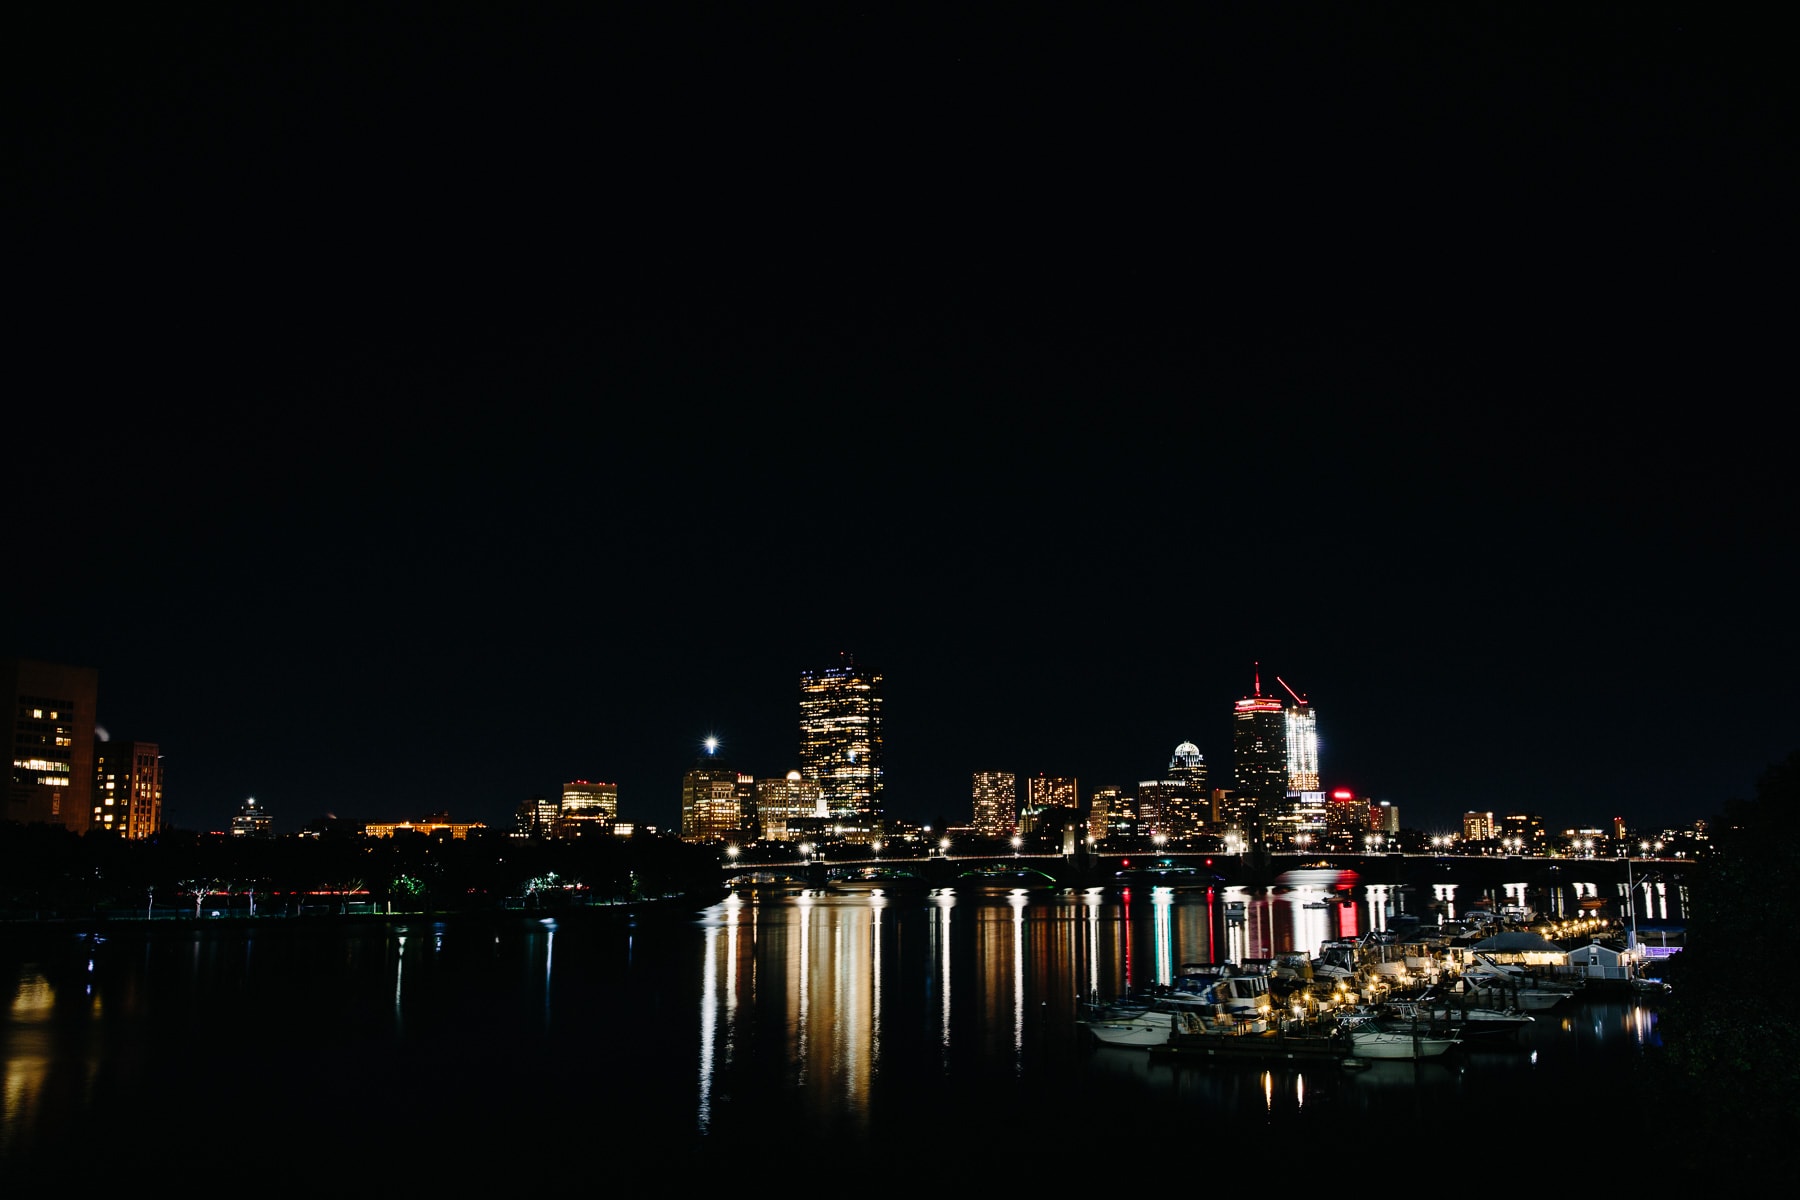 Boston skyline at night